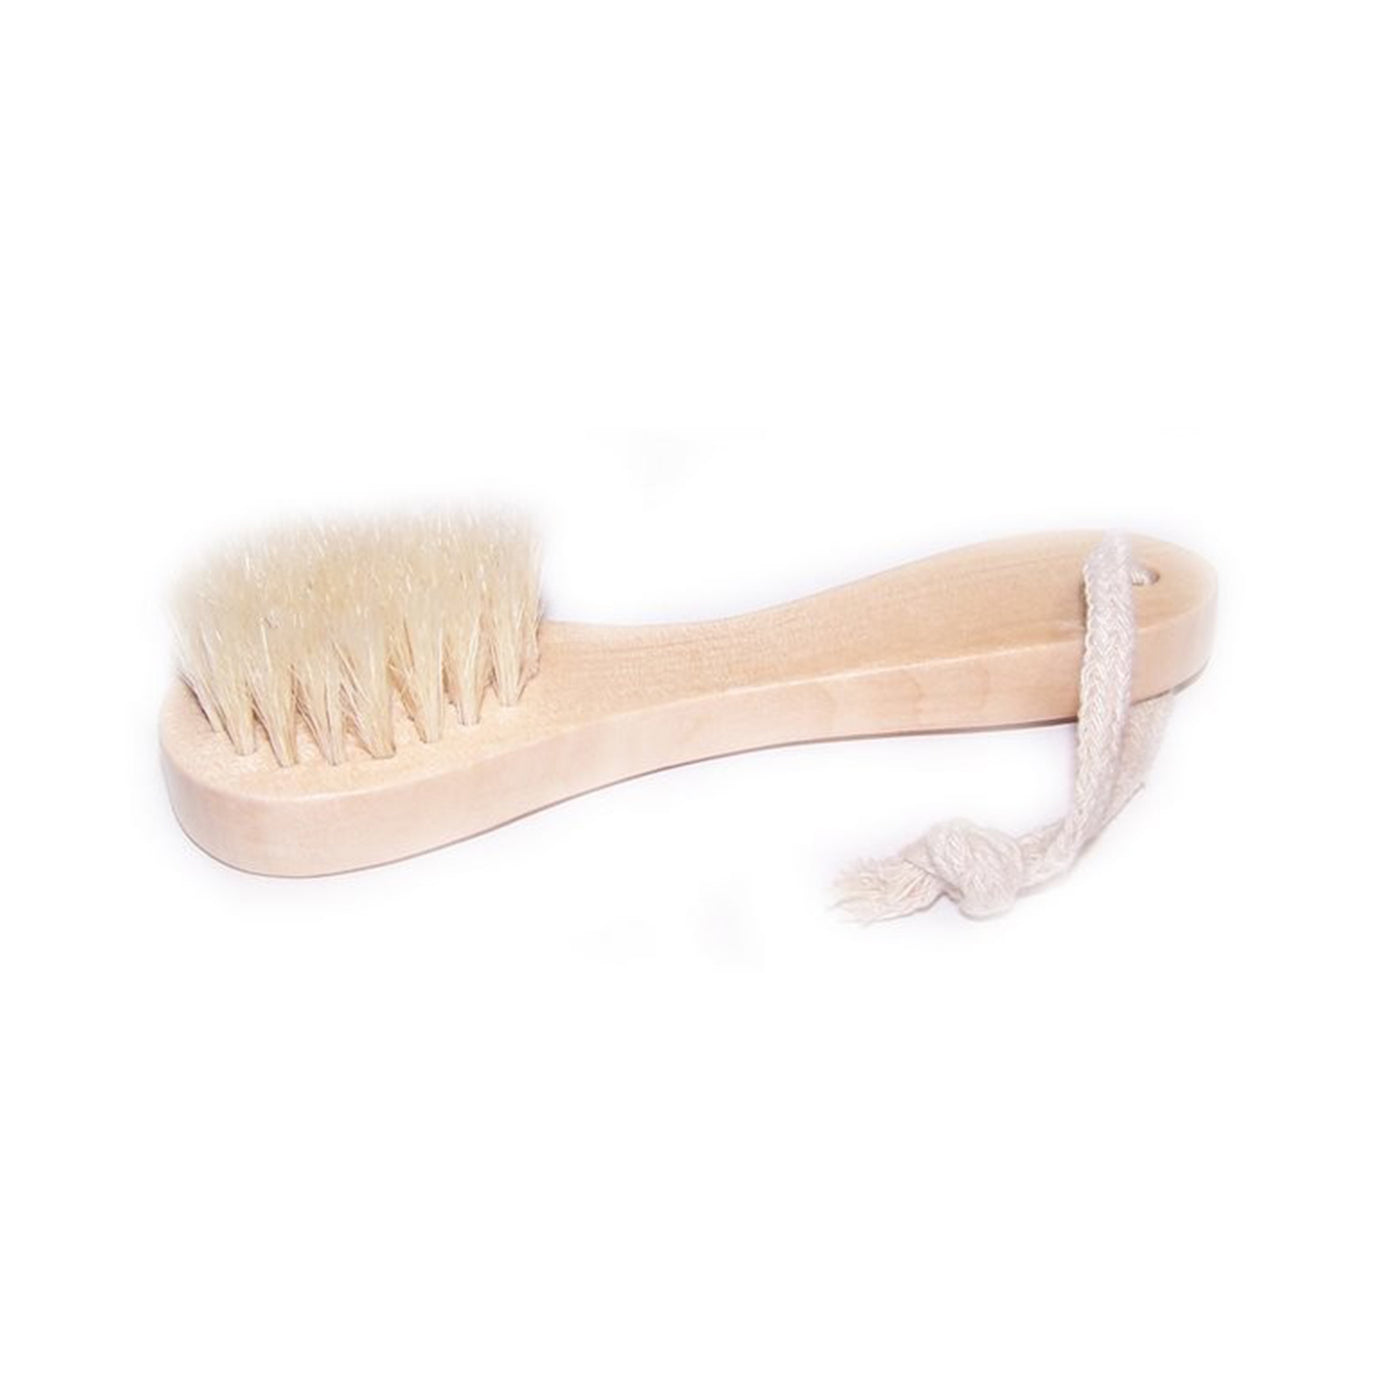 Serious Boar Wooden Hair Scrub Face Brush